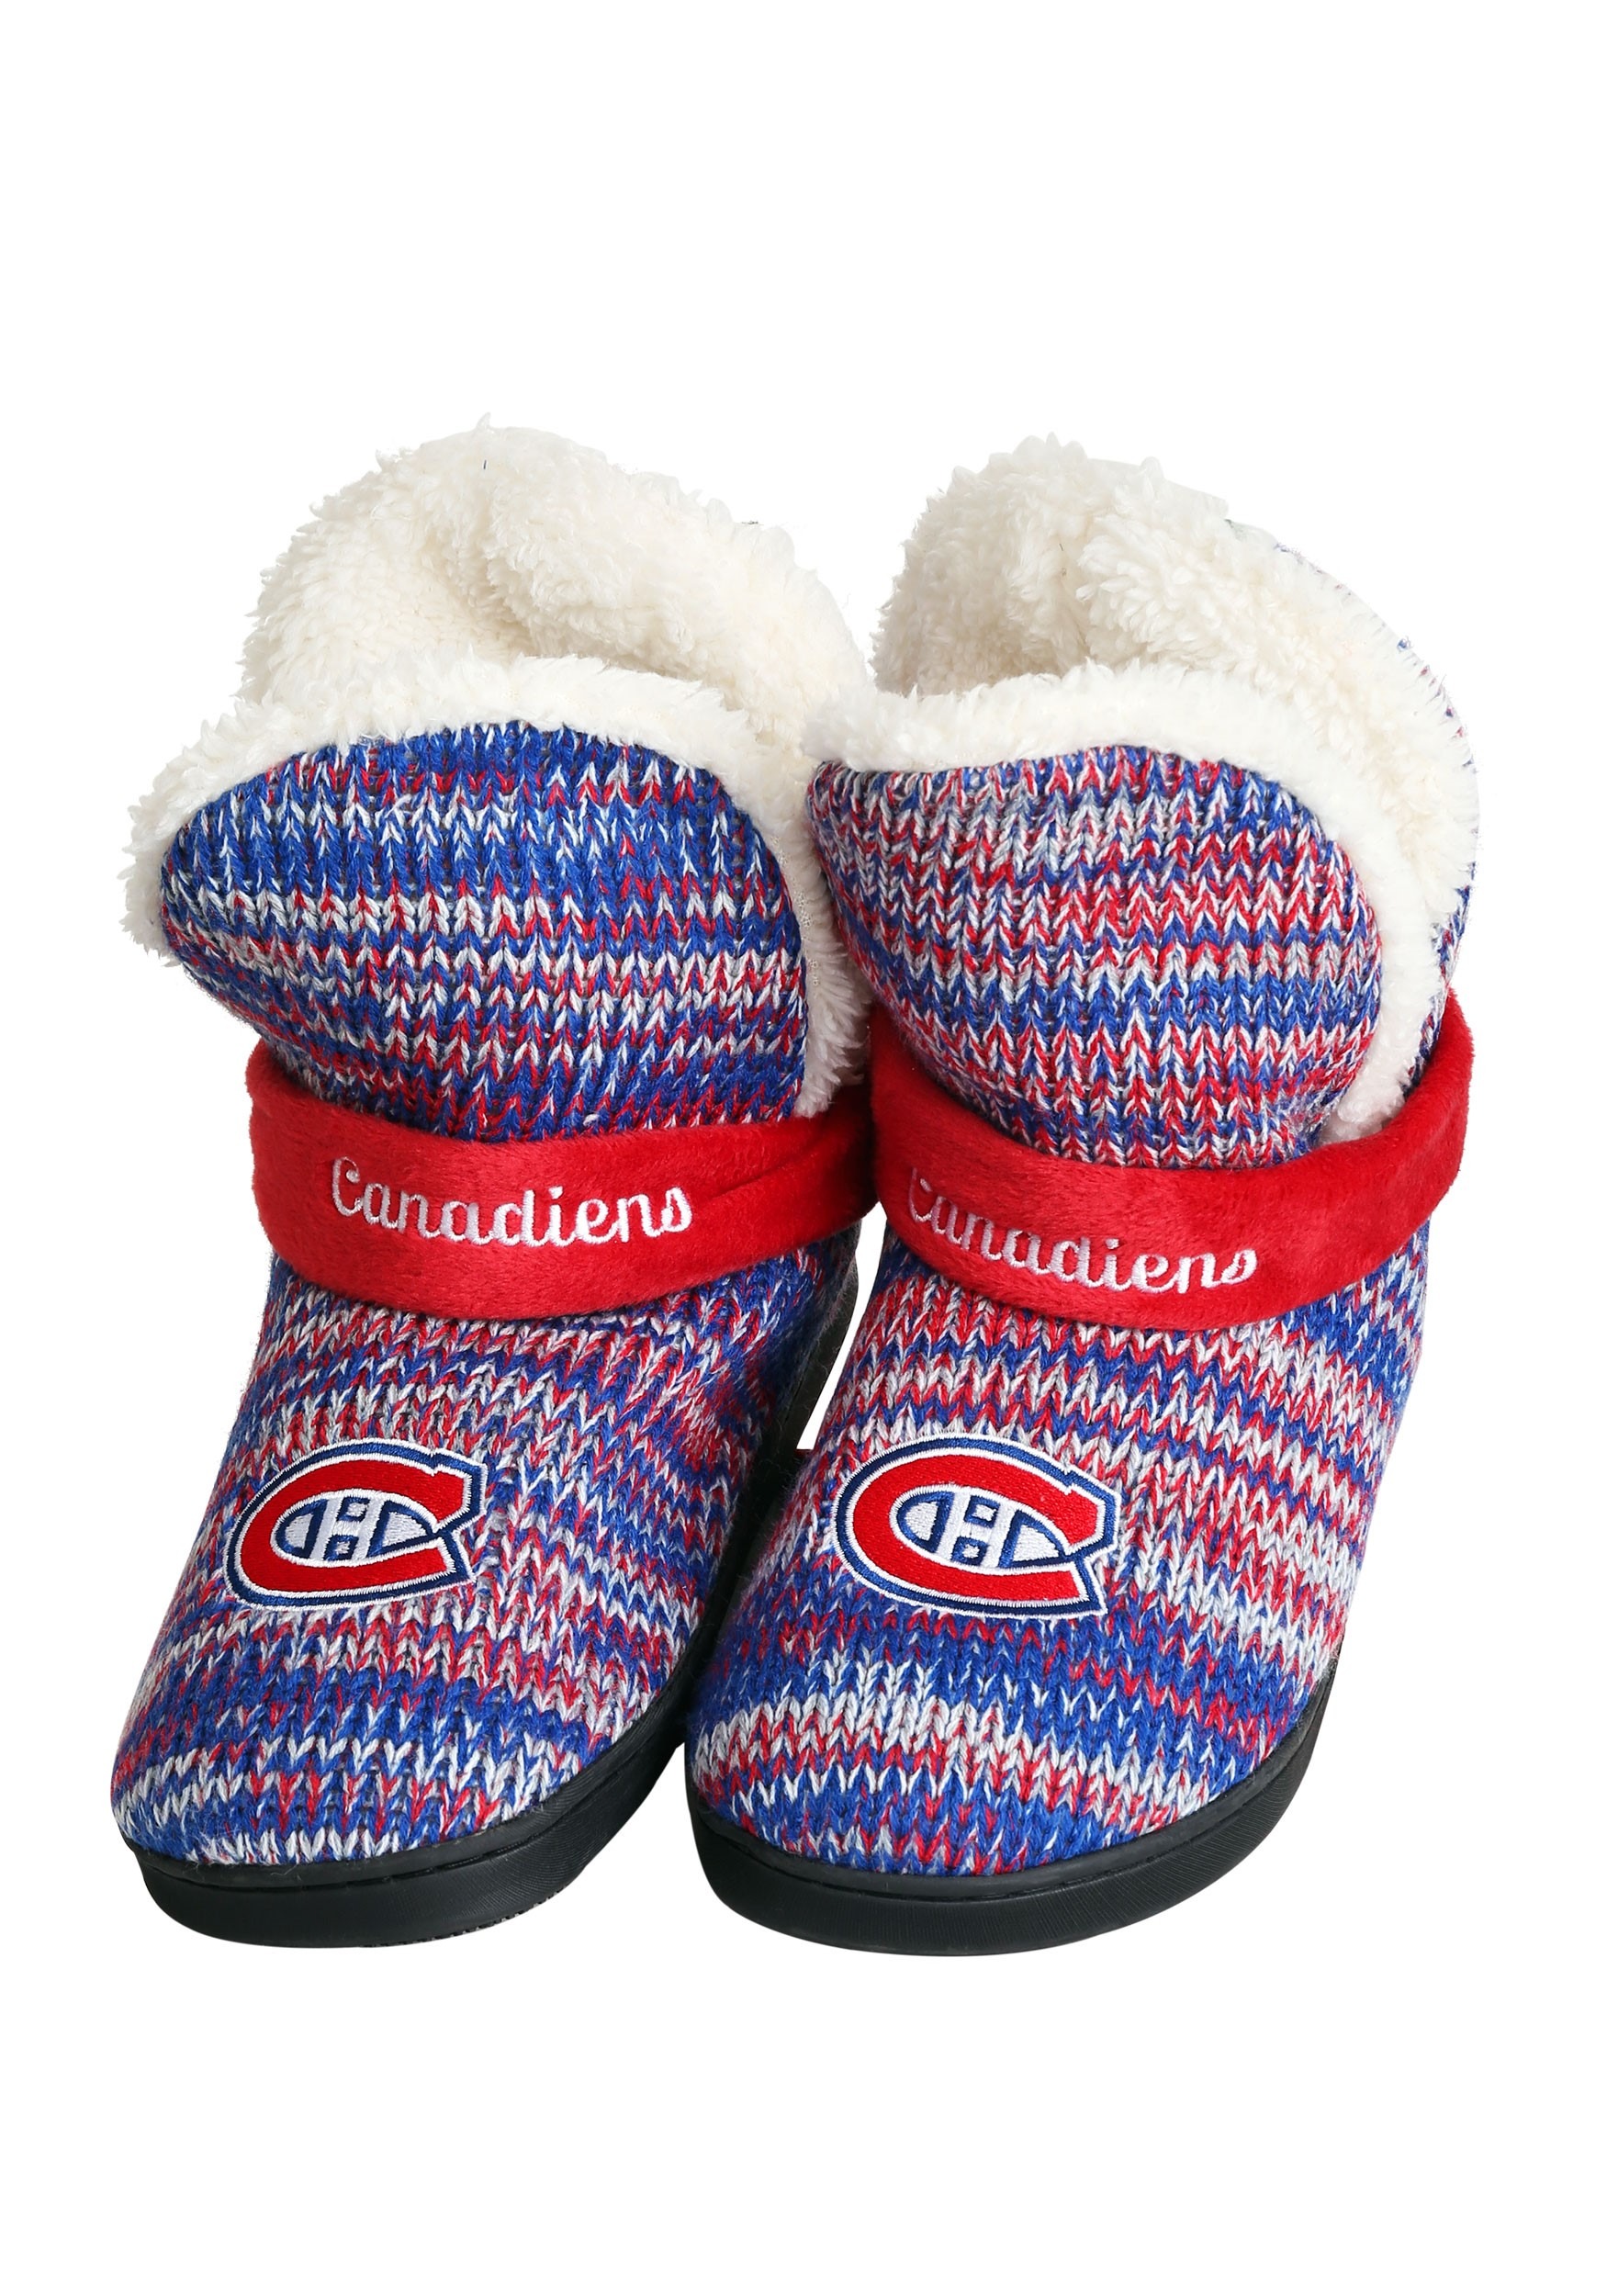 Montreal Canadiens Wordmark Peak Mukluk Women's Boots